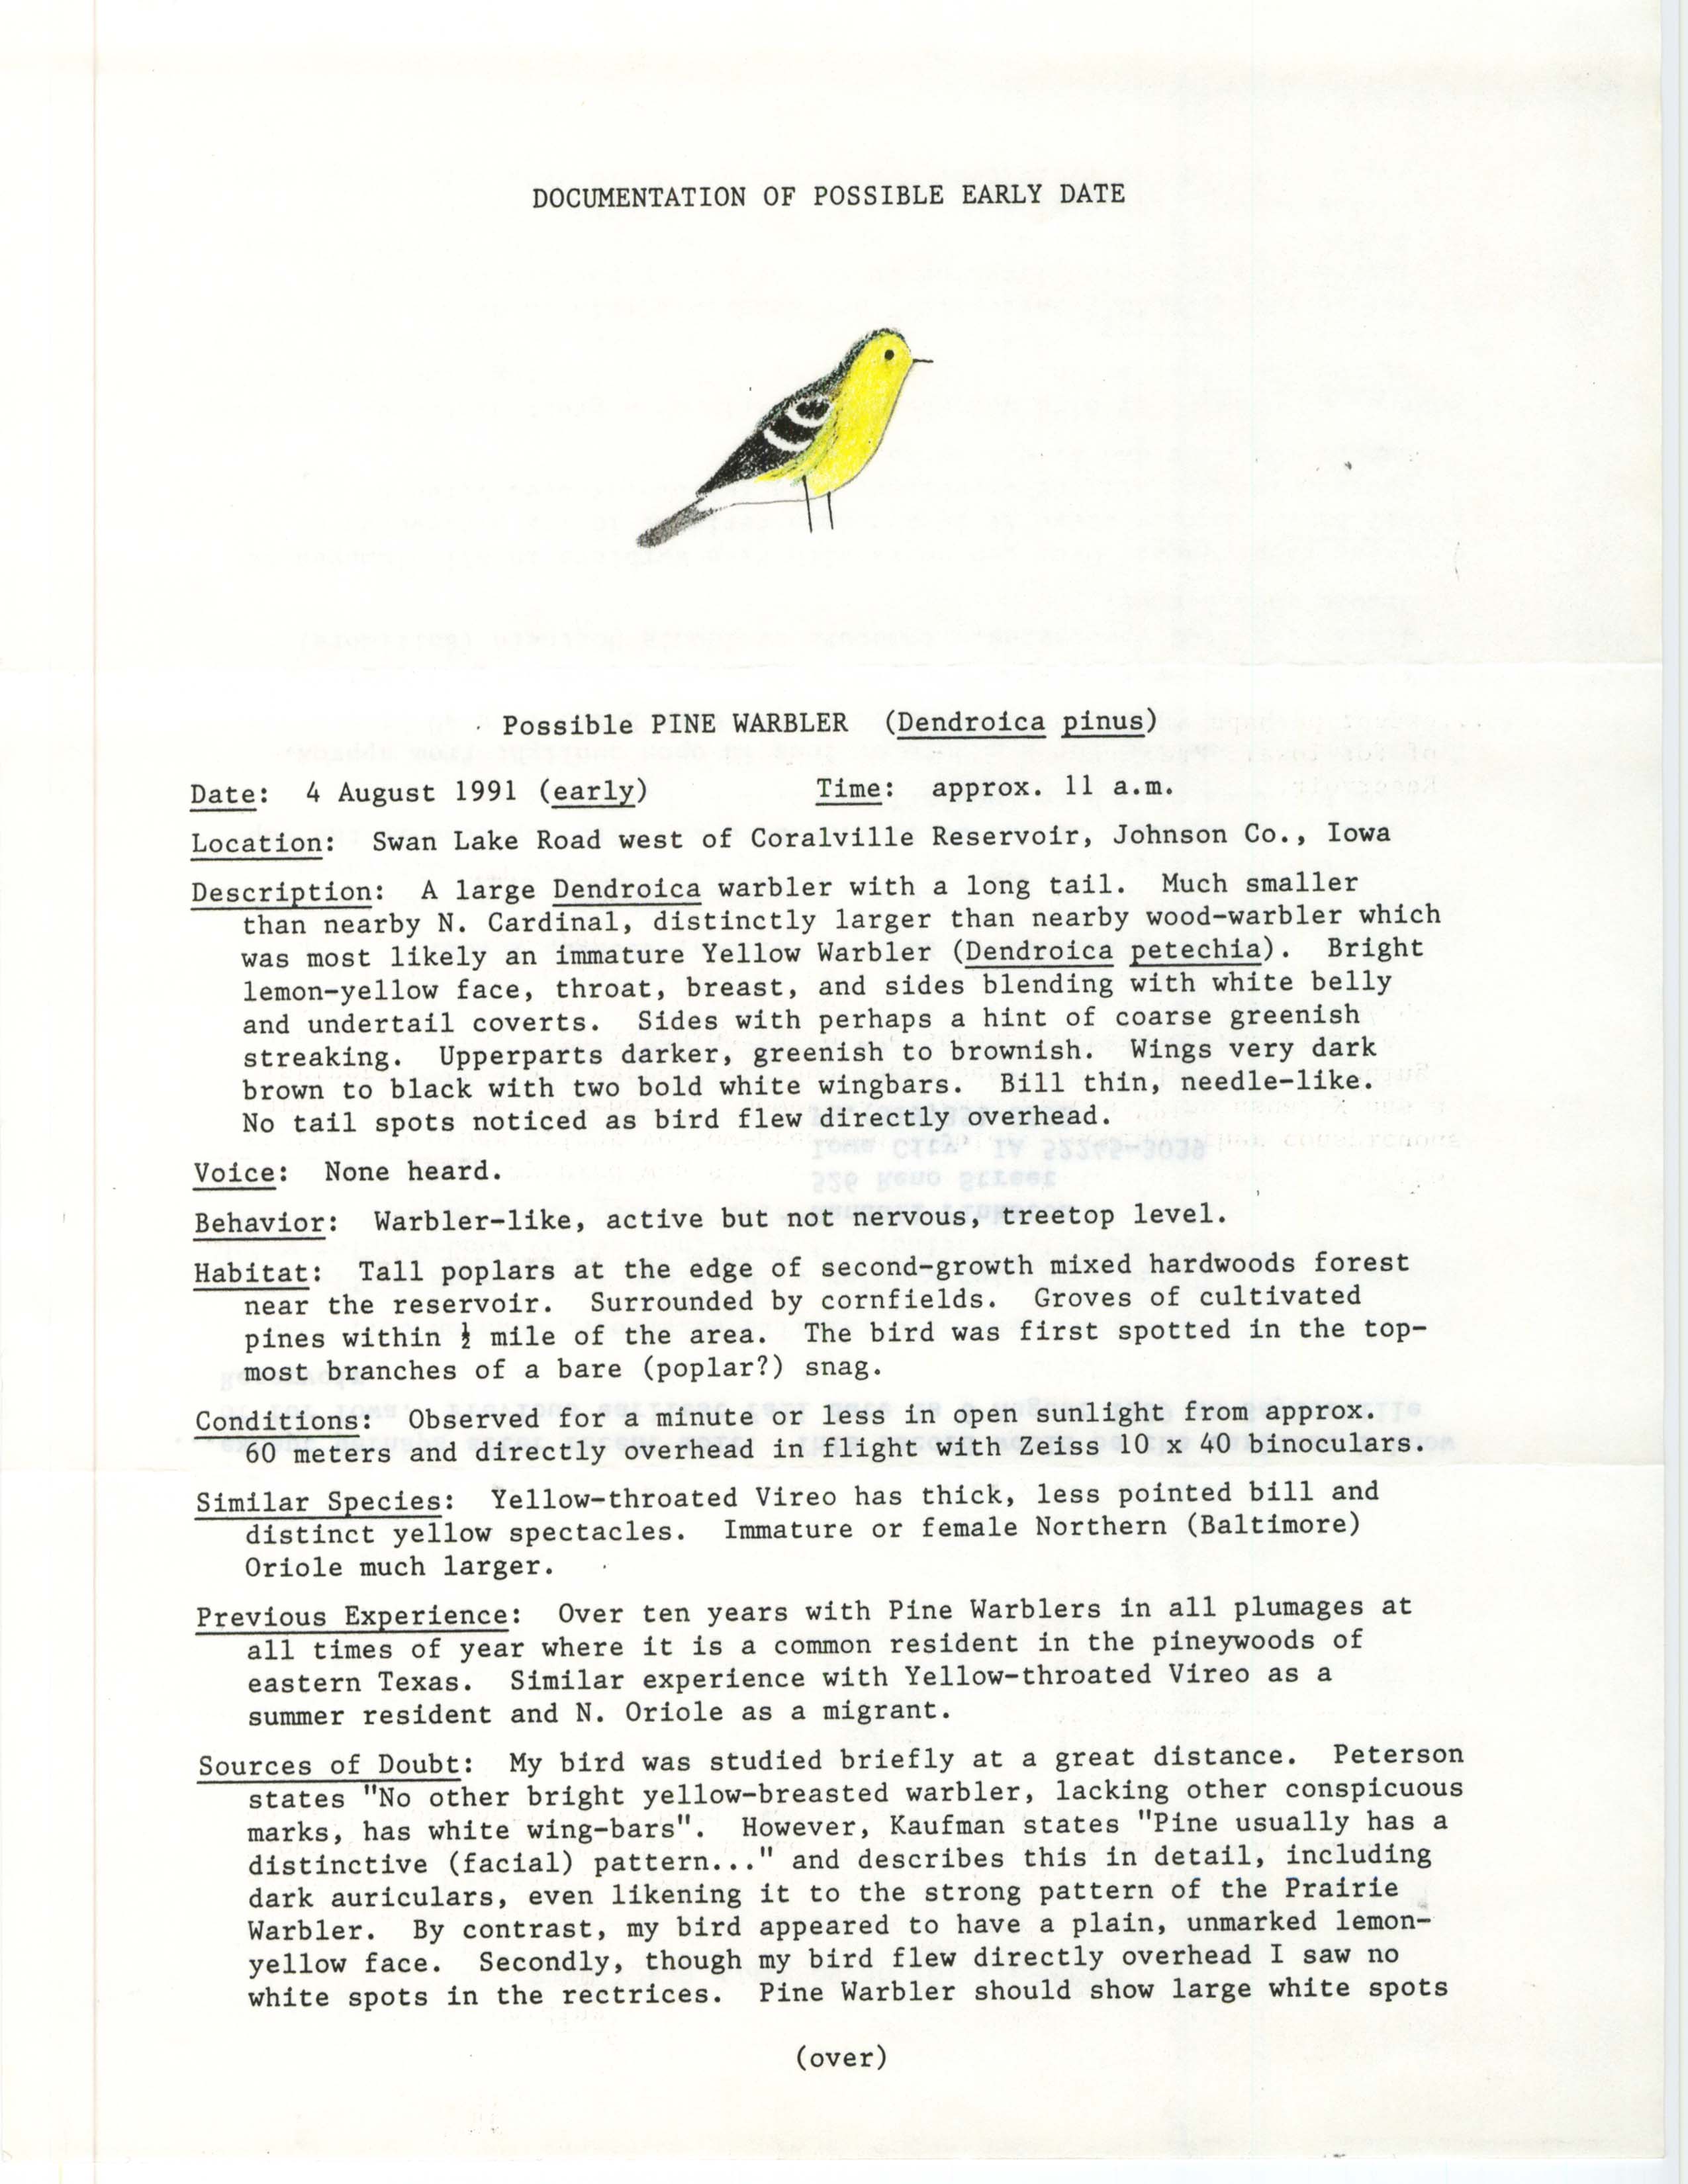 Rare bird documentation form for Pine Warbler west of Coralville Reservoir, 1991